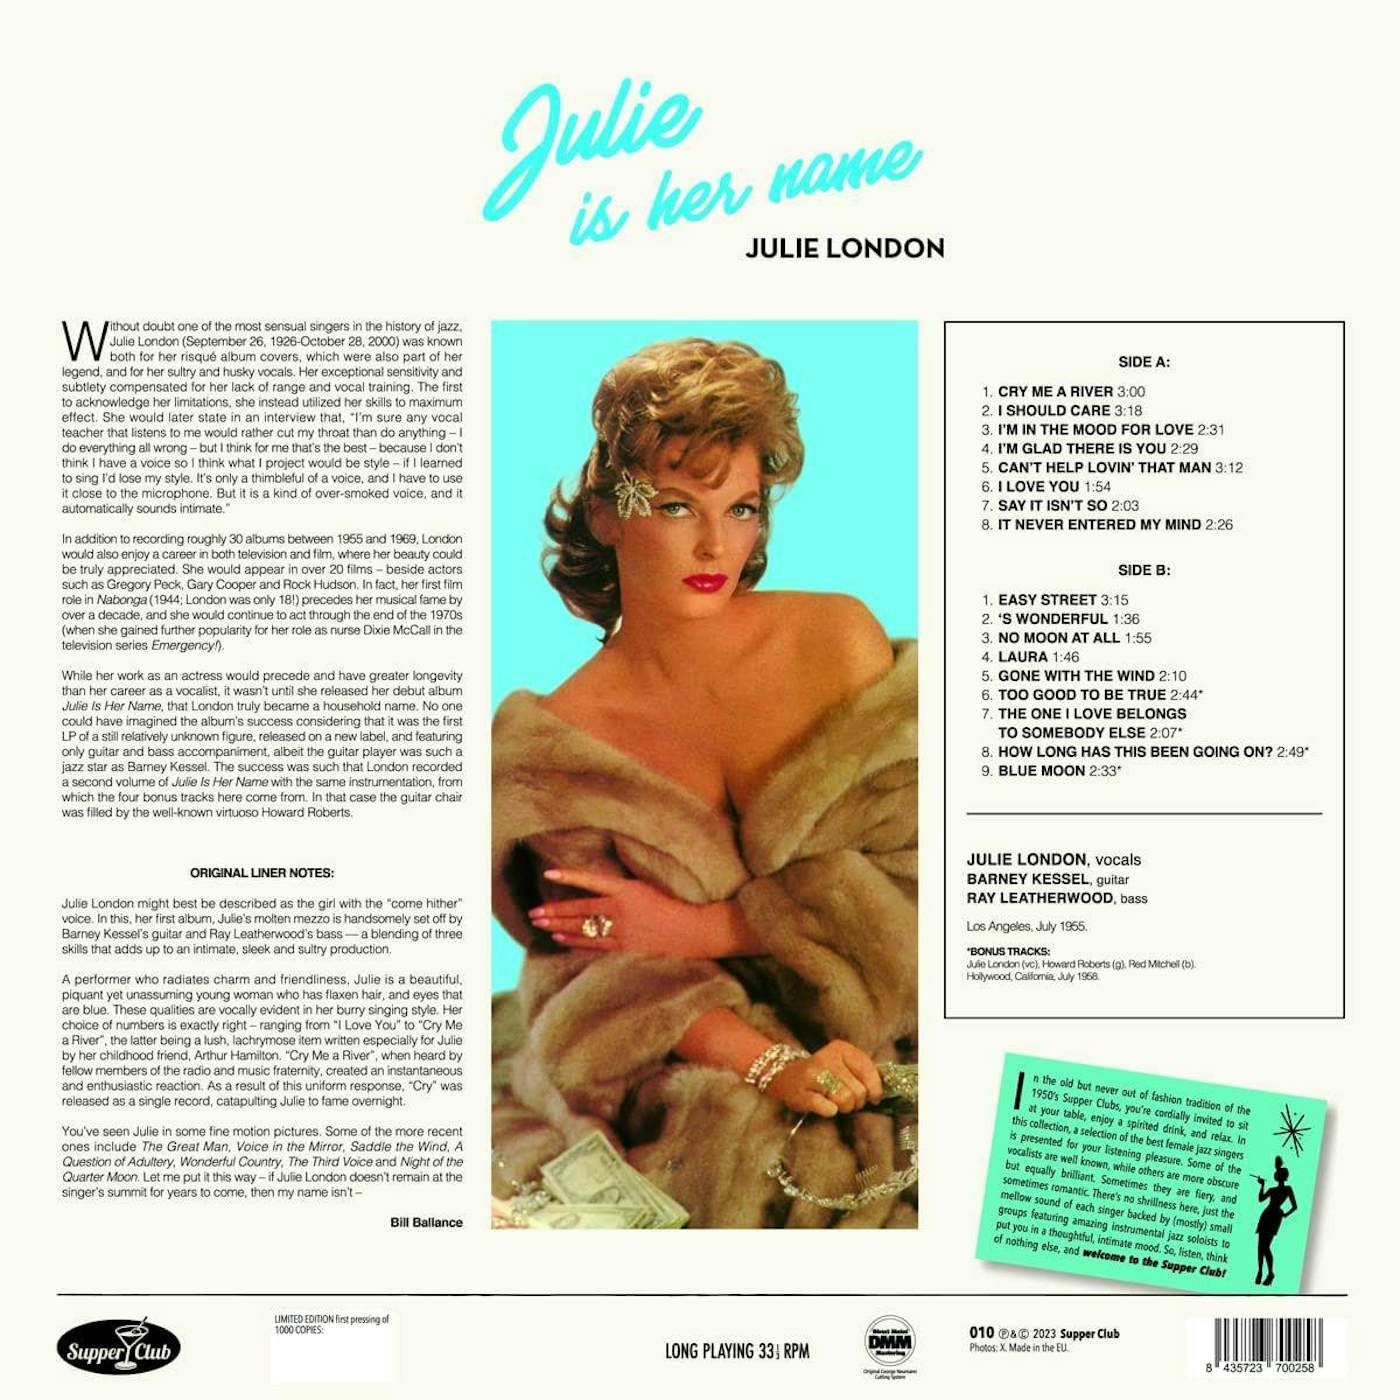 Julie London Julie Is Her Name Vinyl Record